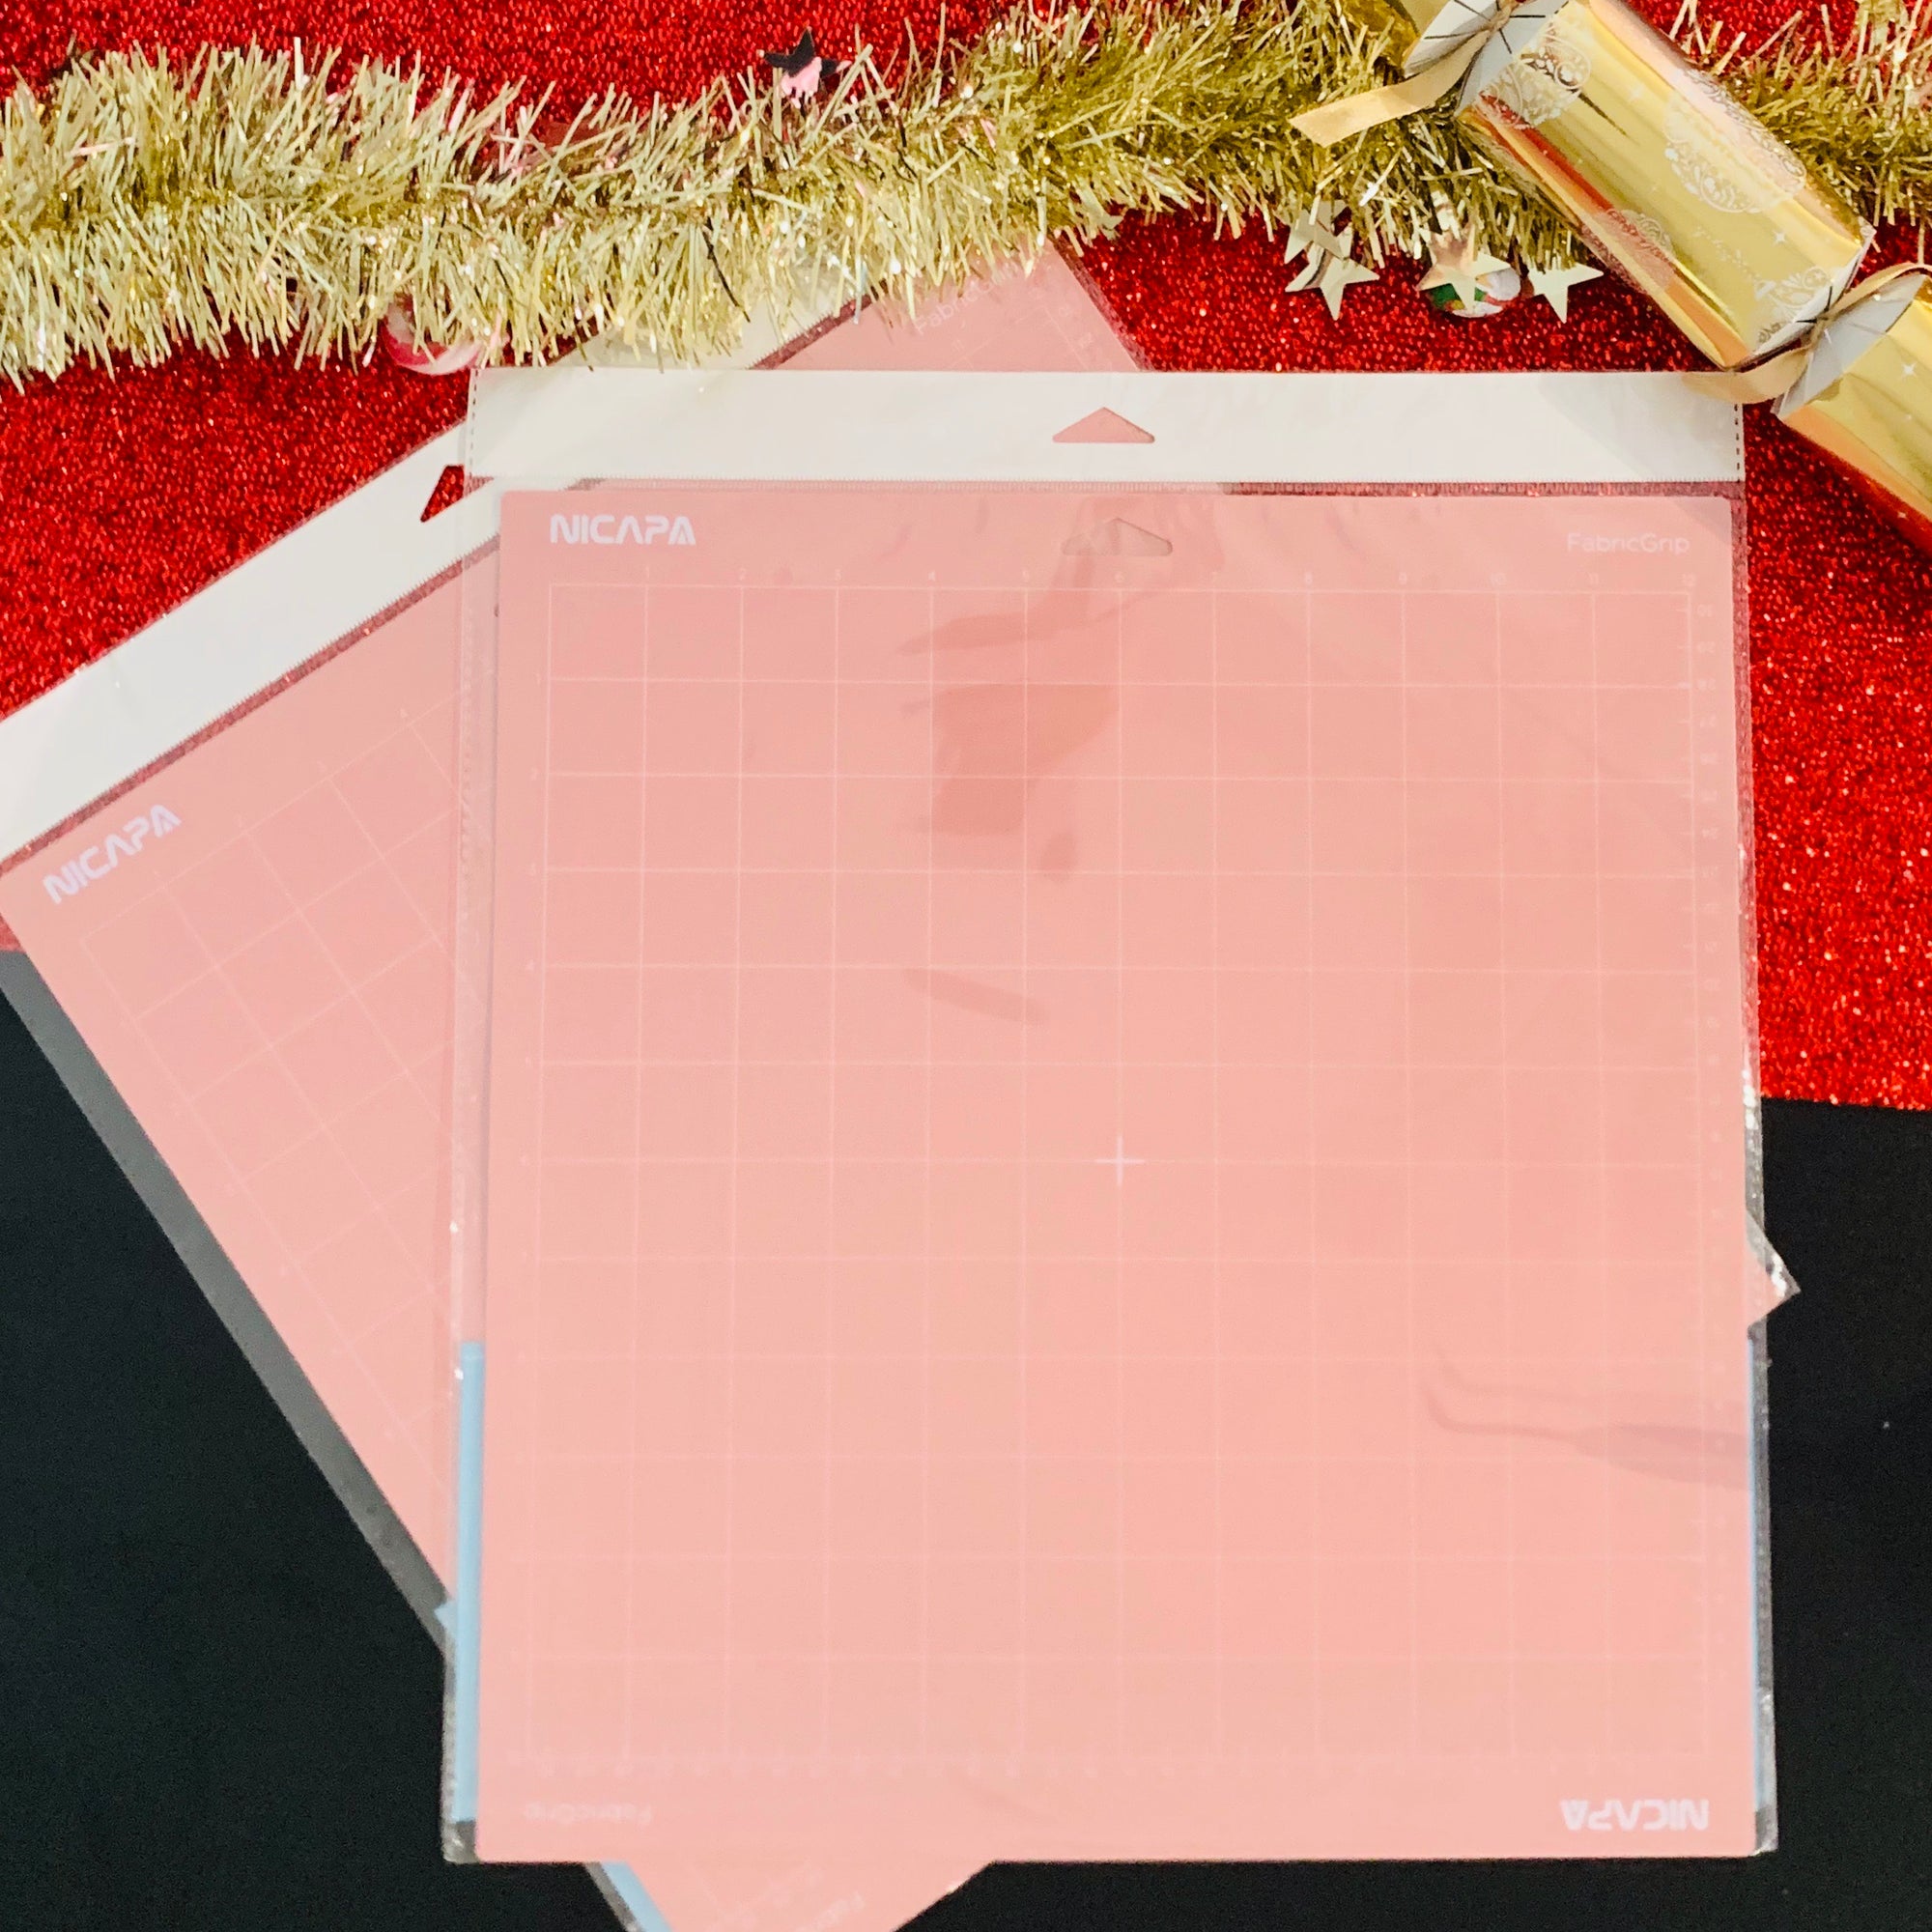 9 Pack: Cricut FabricGrip Mat, 12 inch x 24 inch, Size: 12 x 24, Pink